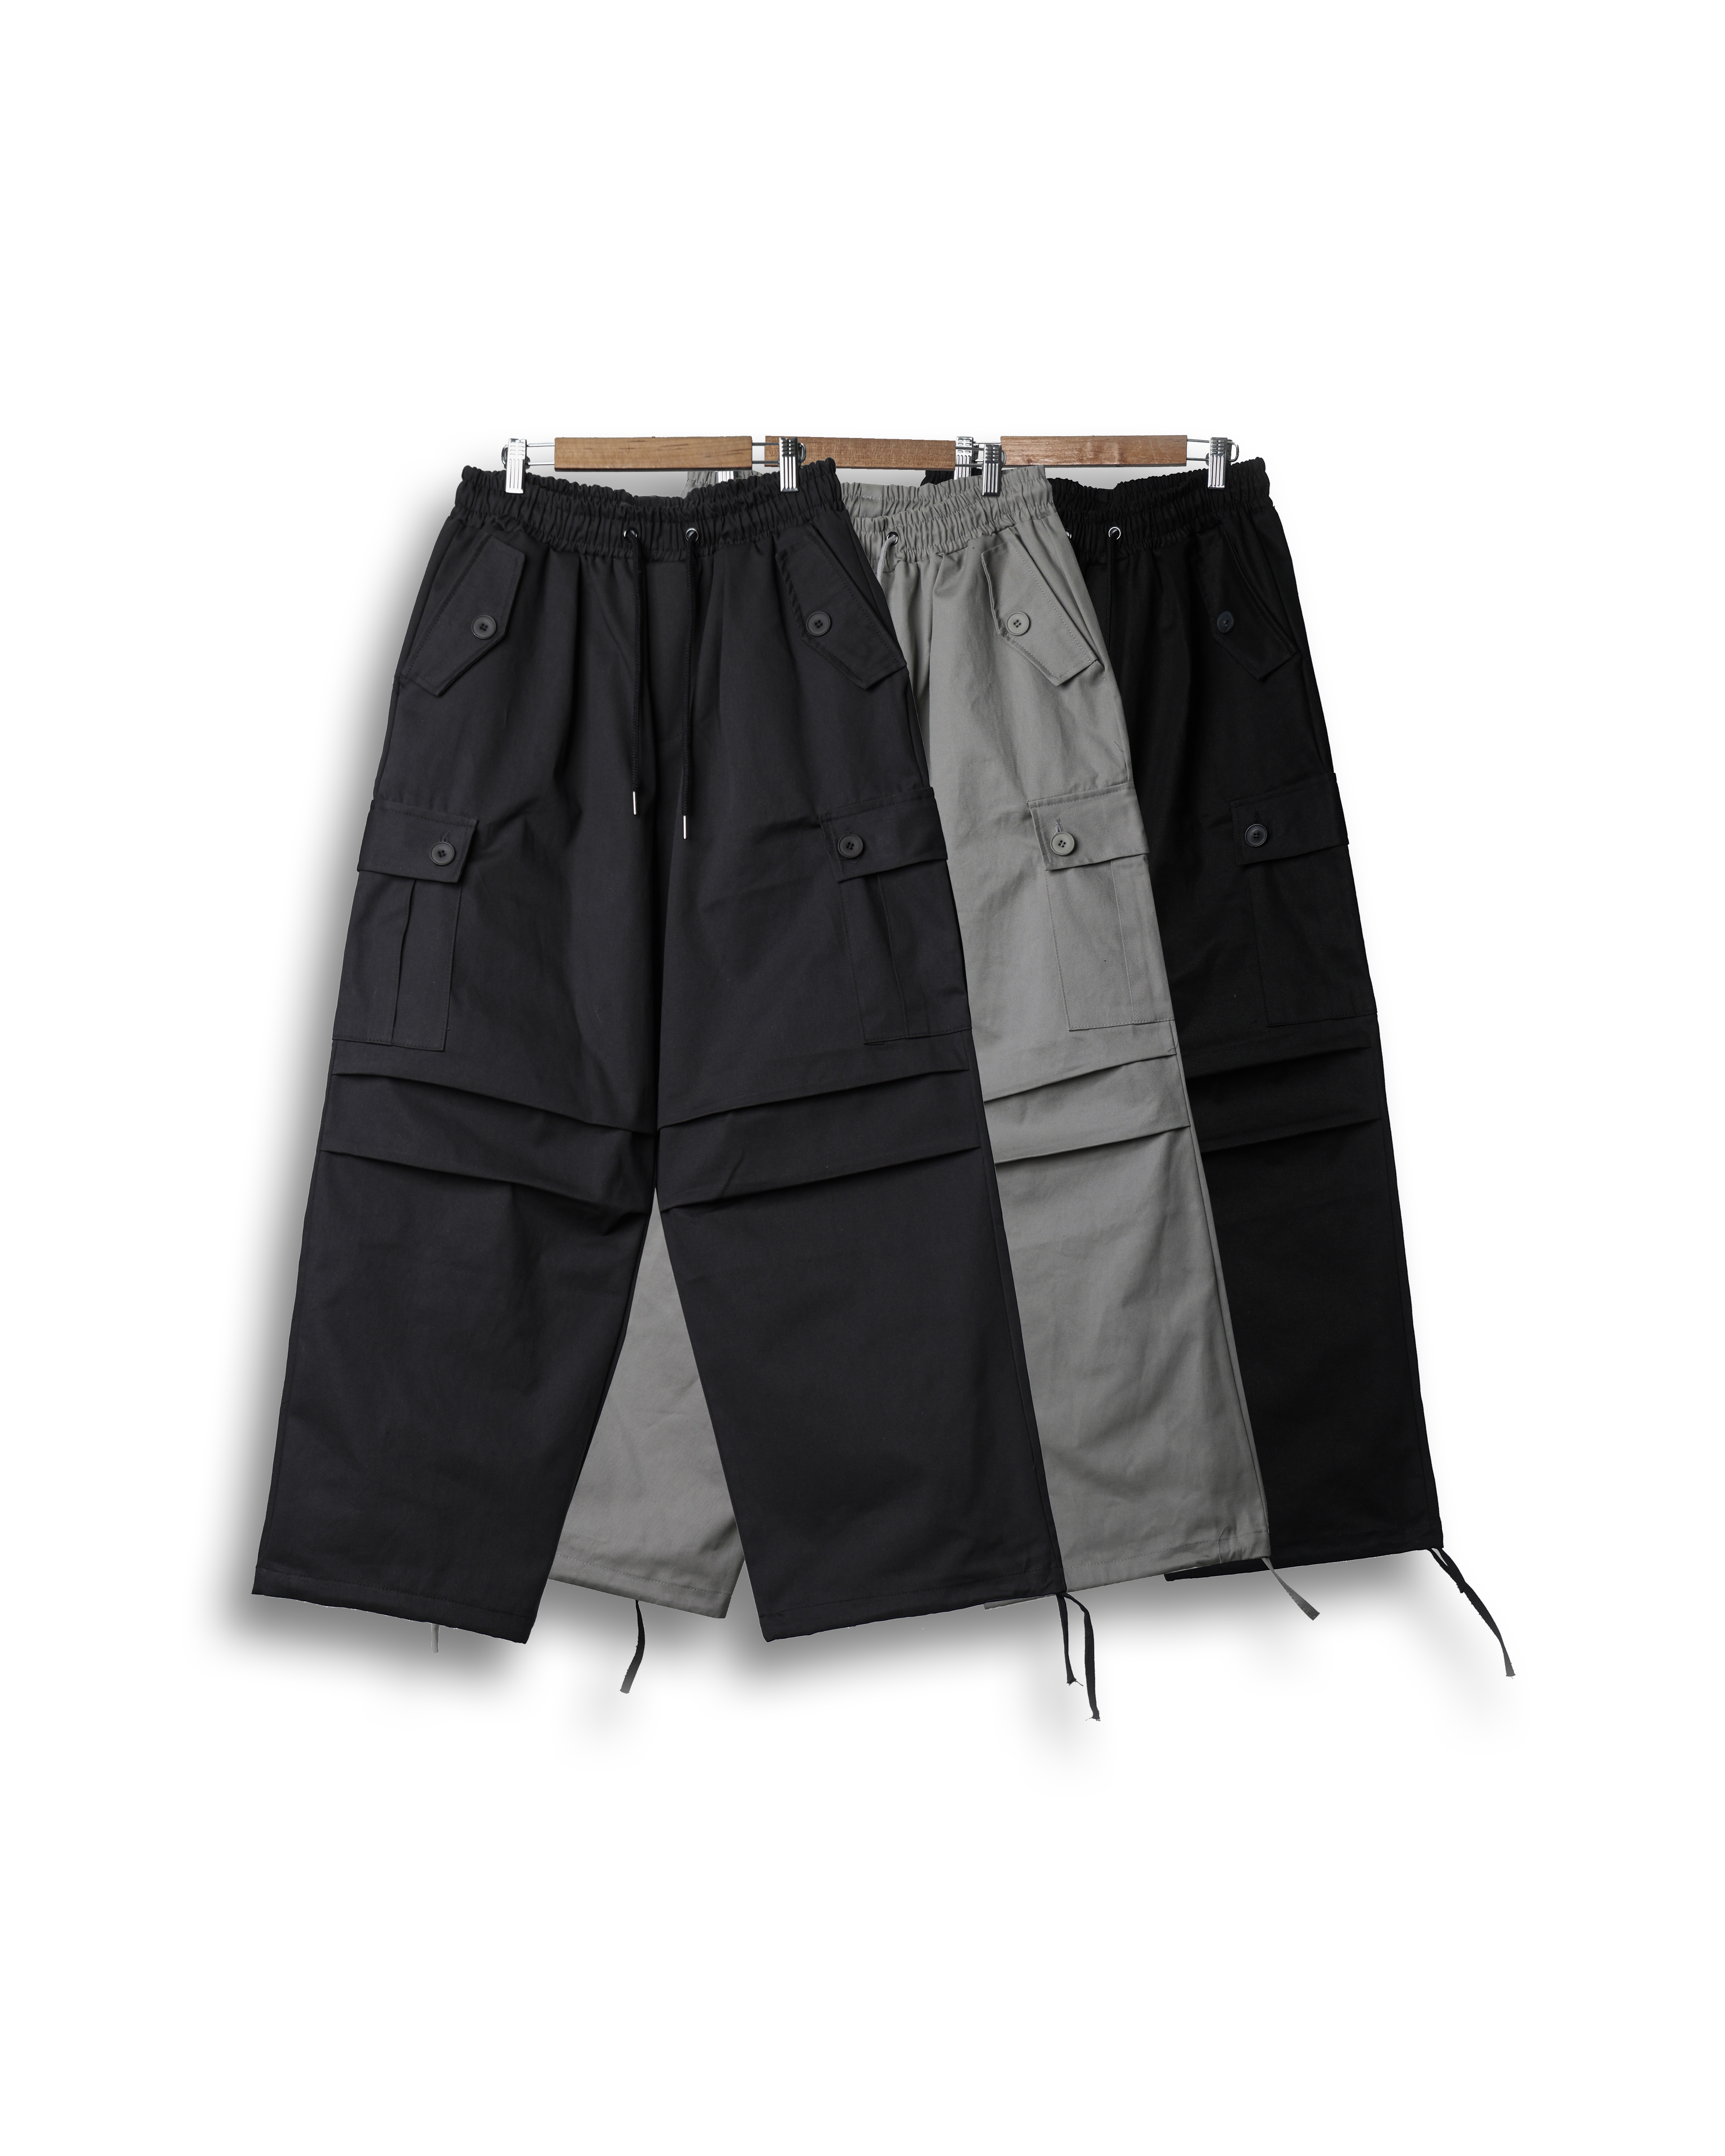 SHIN Button Cargo Parachute Pants (Black/Gray/Charcoal)